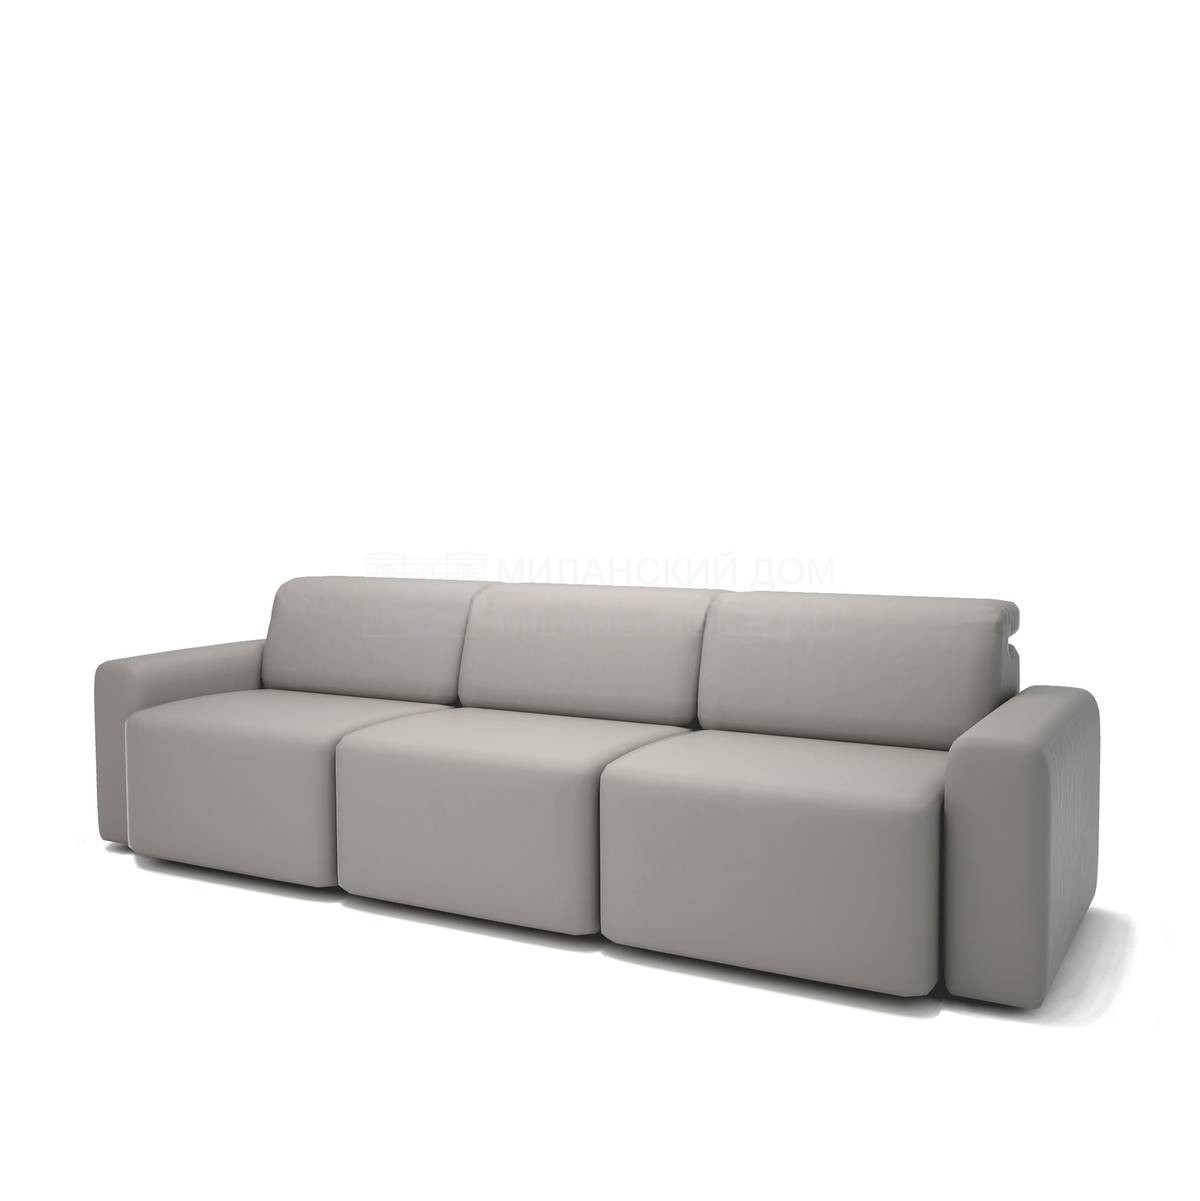 Прямой диван Cosmopol sofa / art.A4510/ A4511/ A4526 из Испании фабрики COLECCION ALEXANDRA